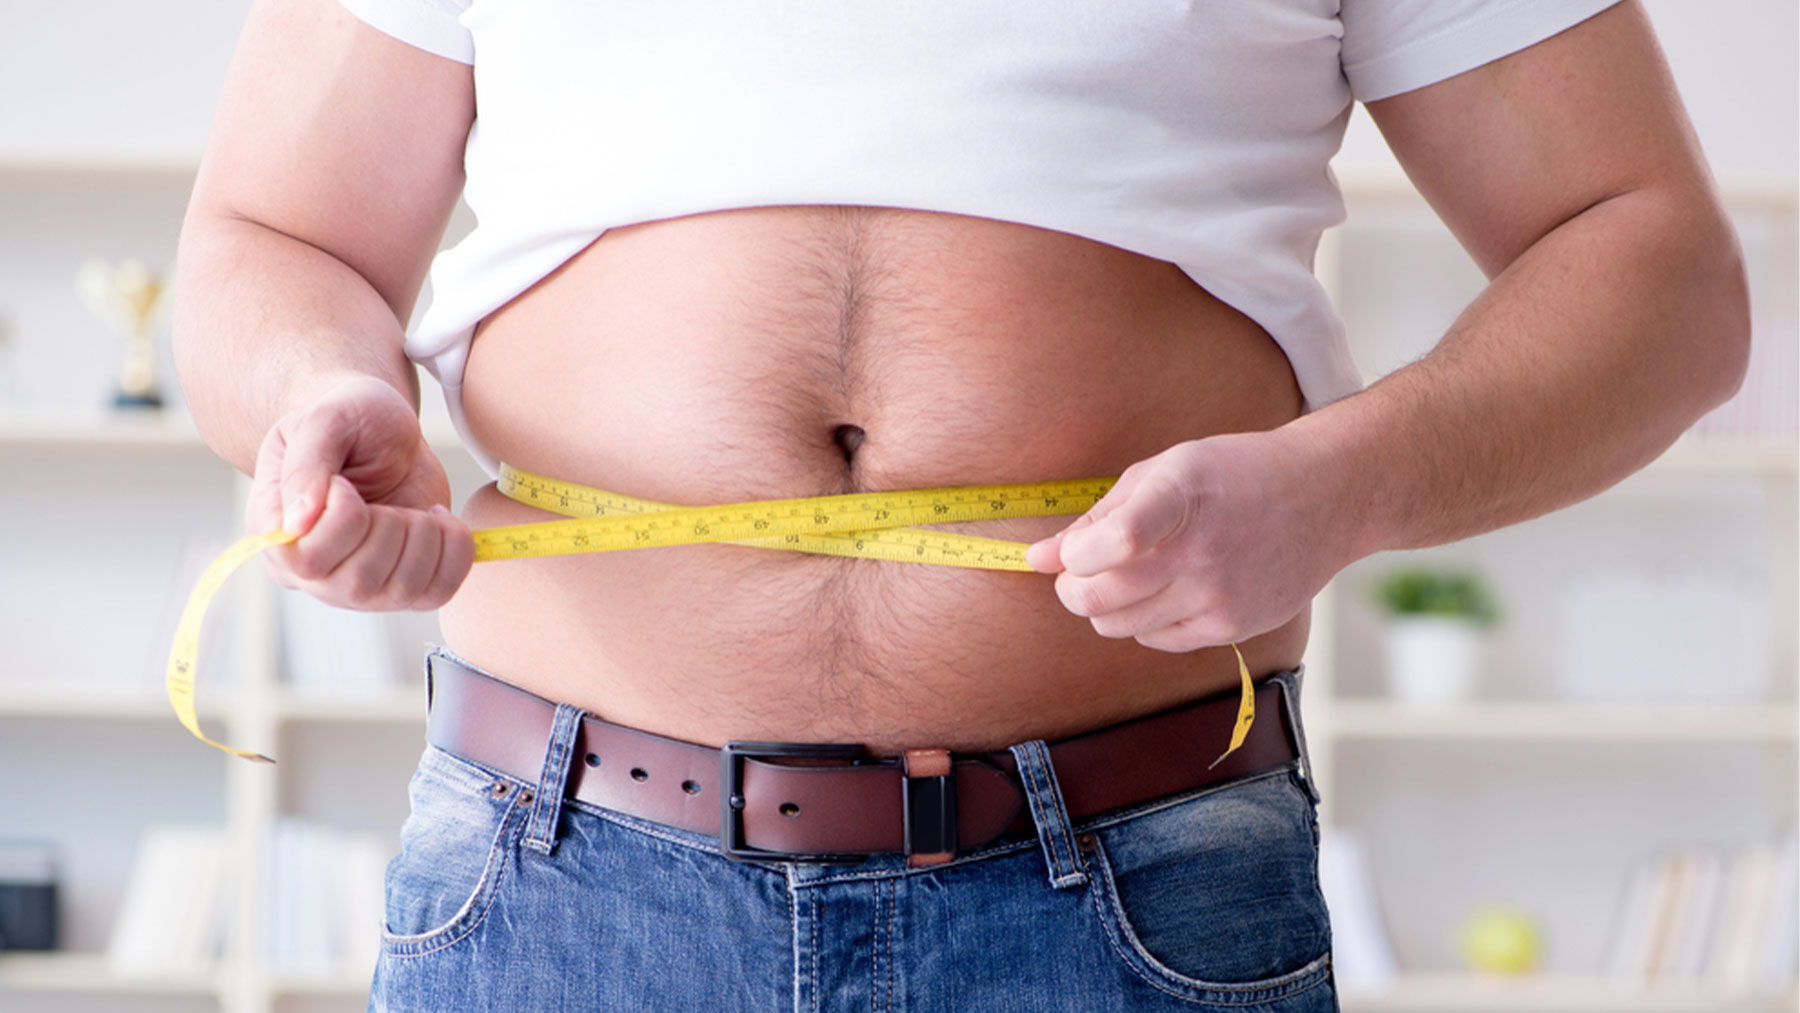 Un perímetro abdominal superior a 102 centímetros en hombres es indicativo de obesidad.